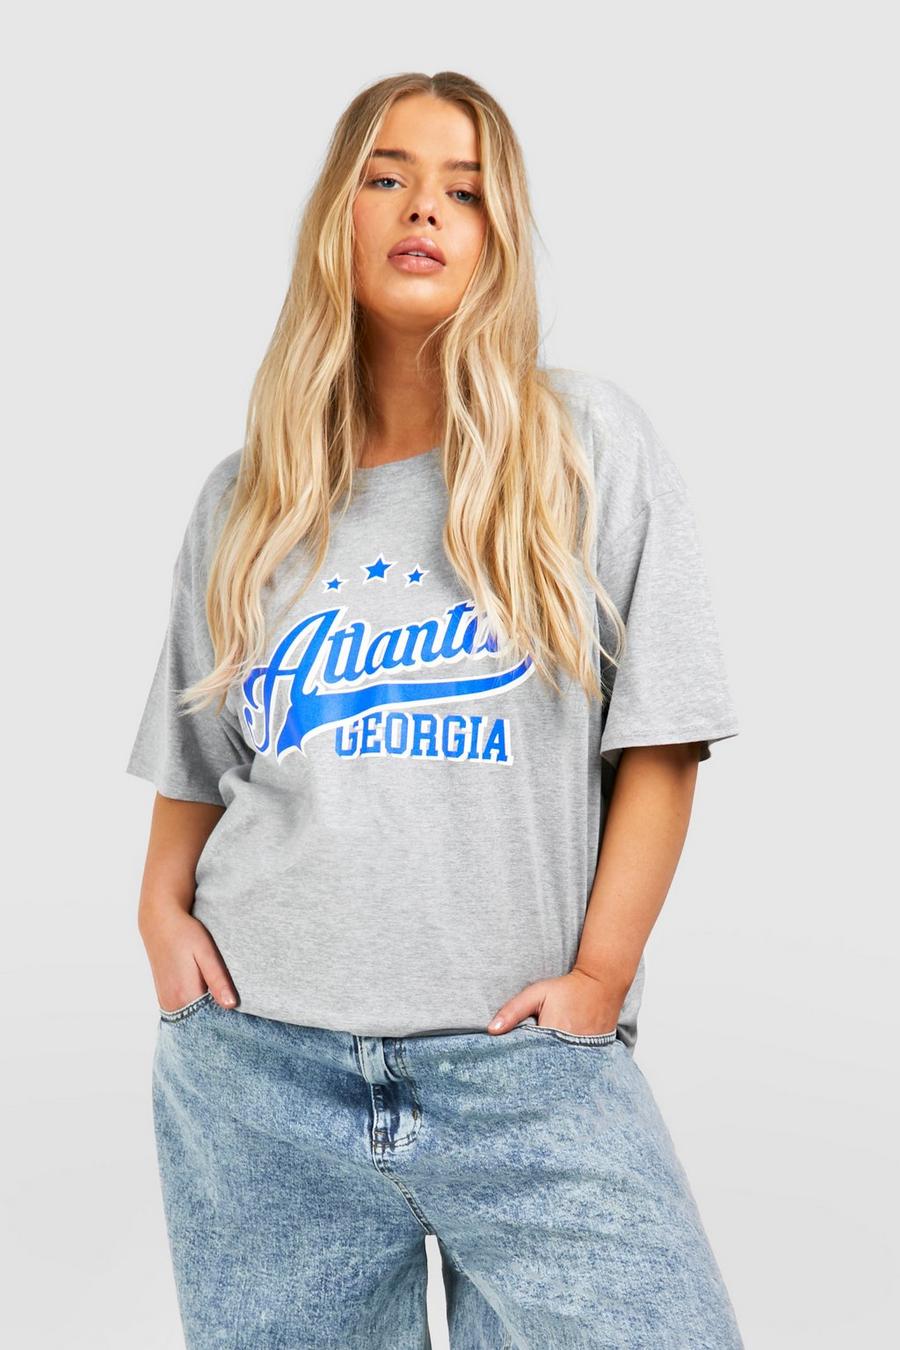 Grande taille - T-shirt à slogan Atlanta Georgia, Grey